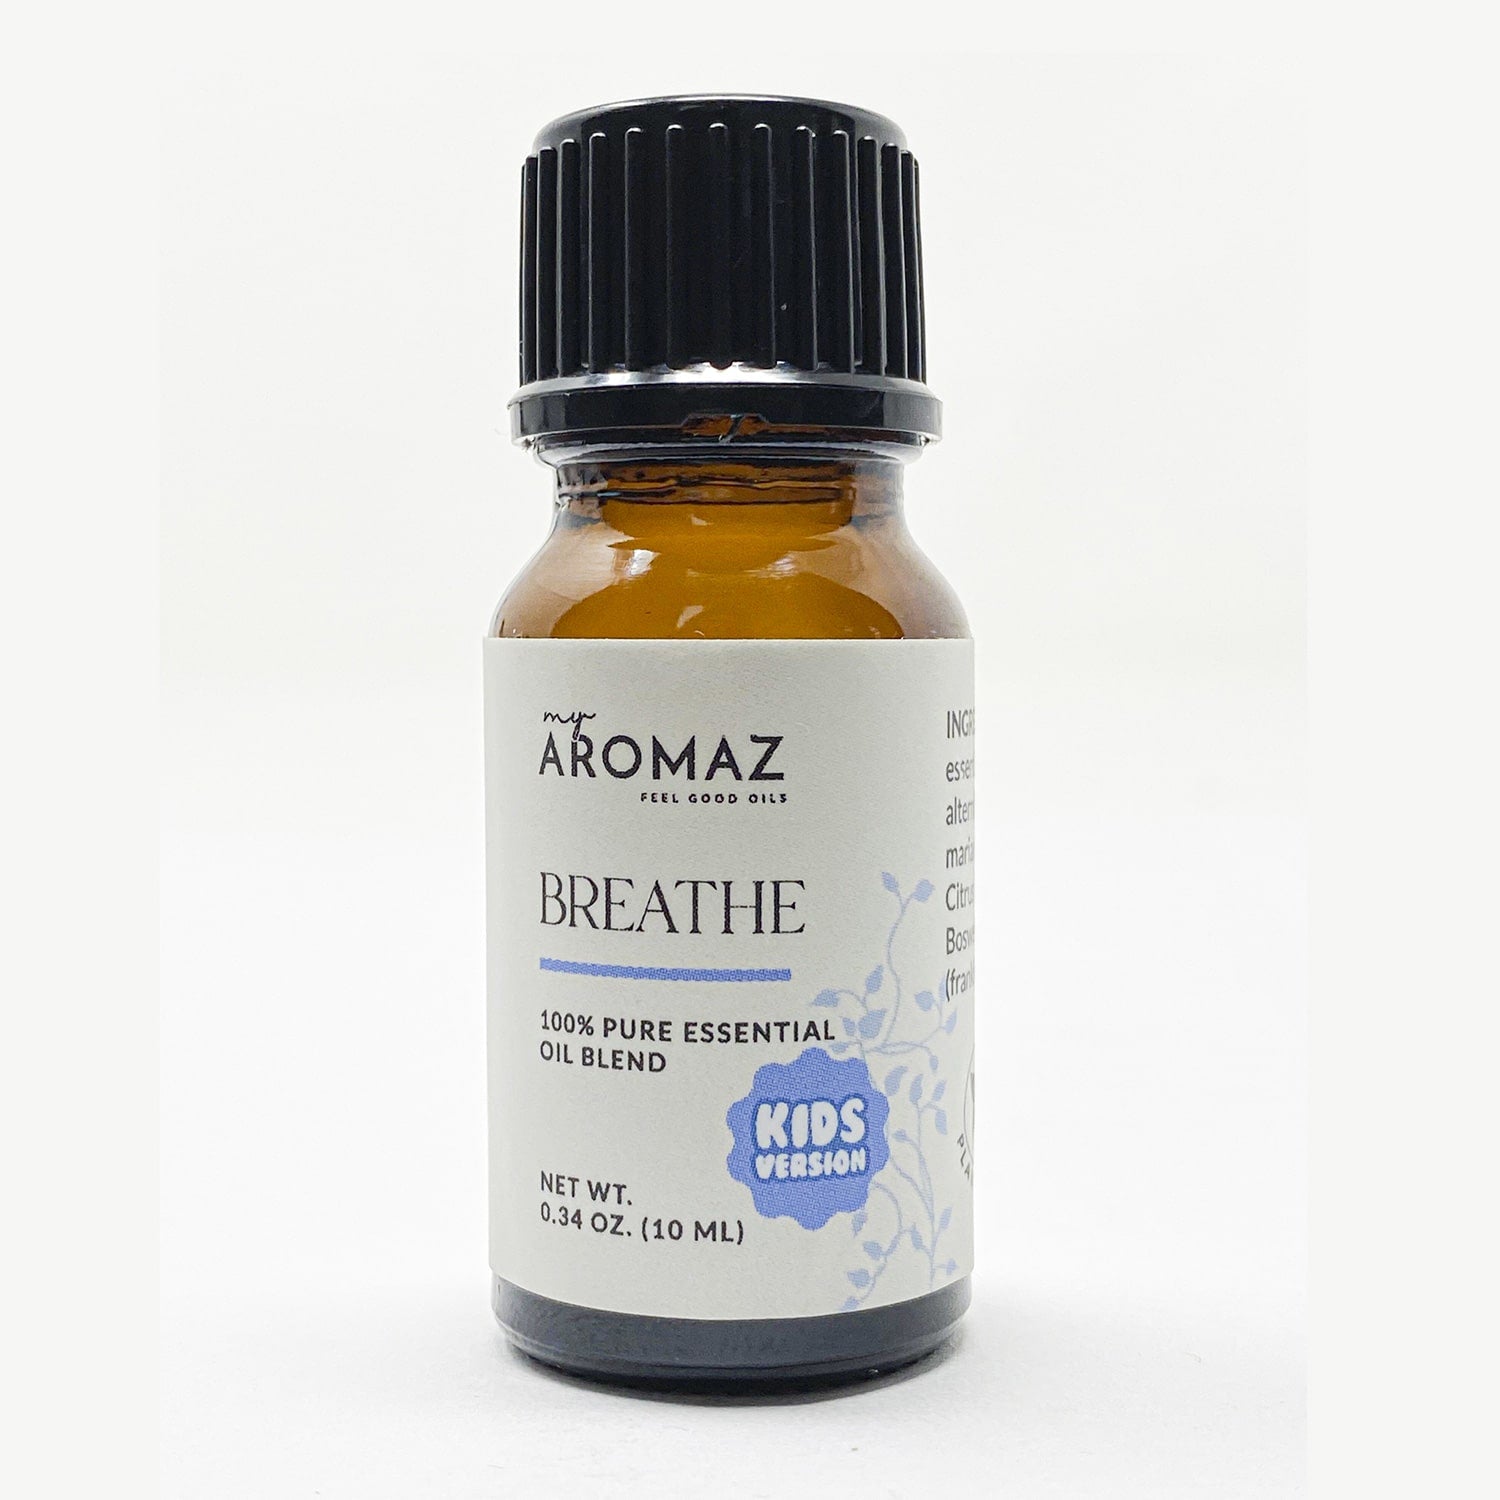 Breathe - Essential oils diffuser blend for Kids